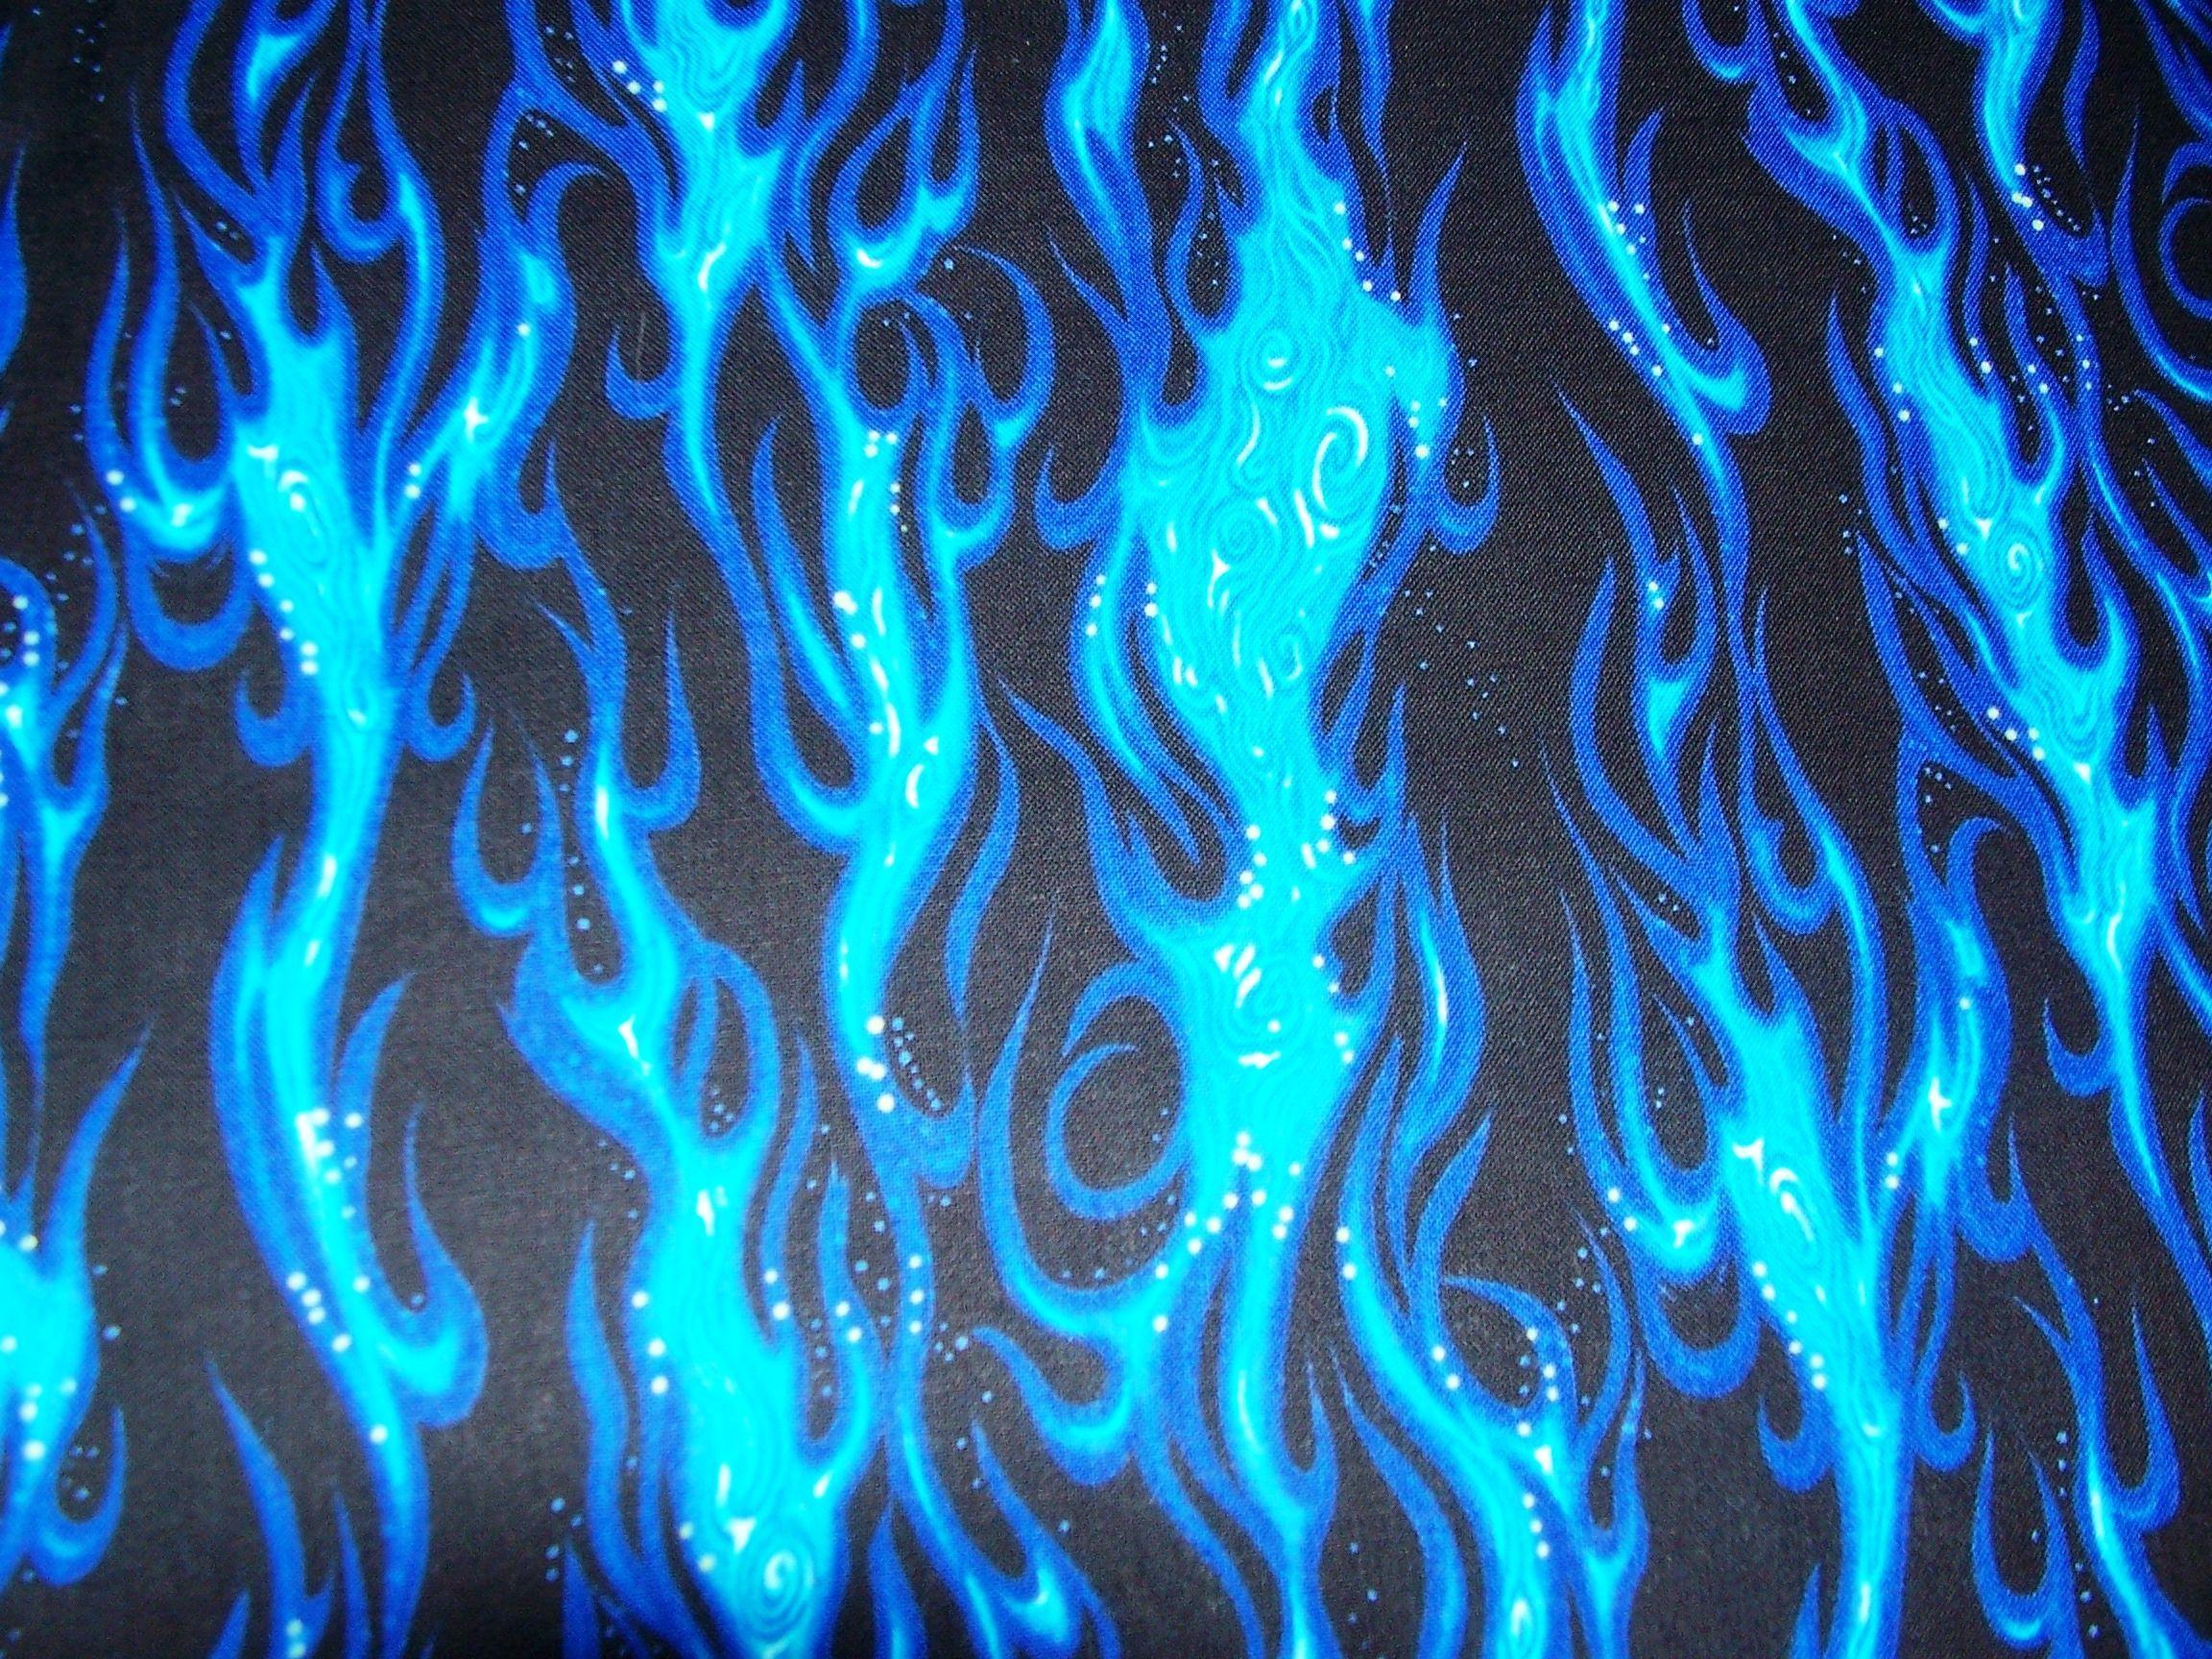 Blue Flames Background Wallpaper. Blue flames